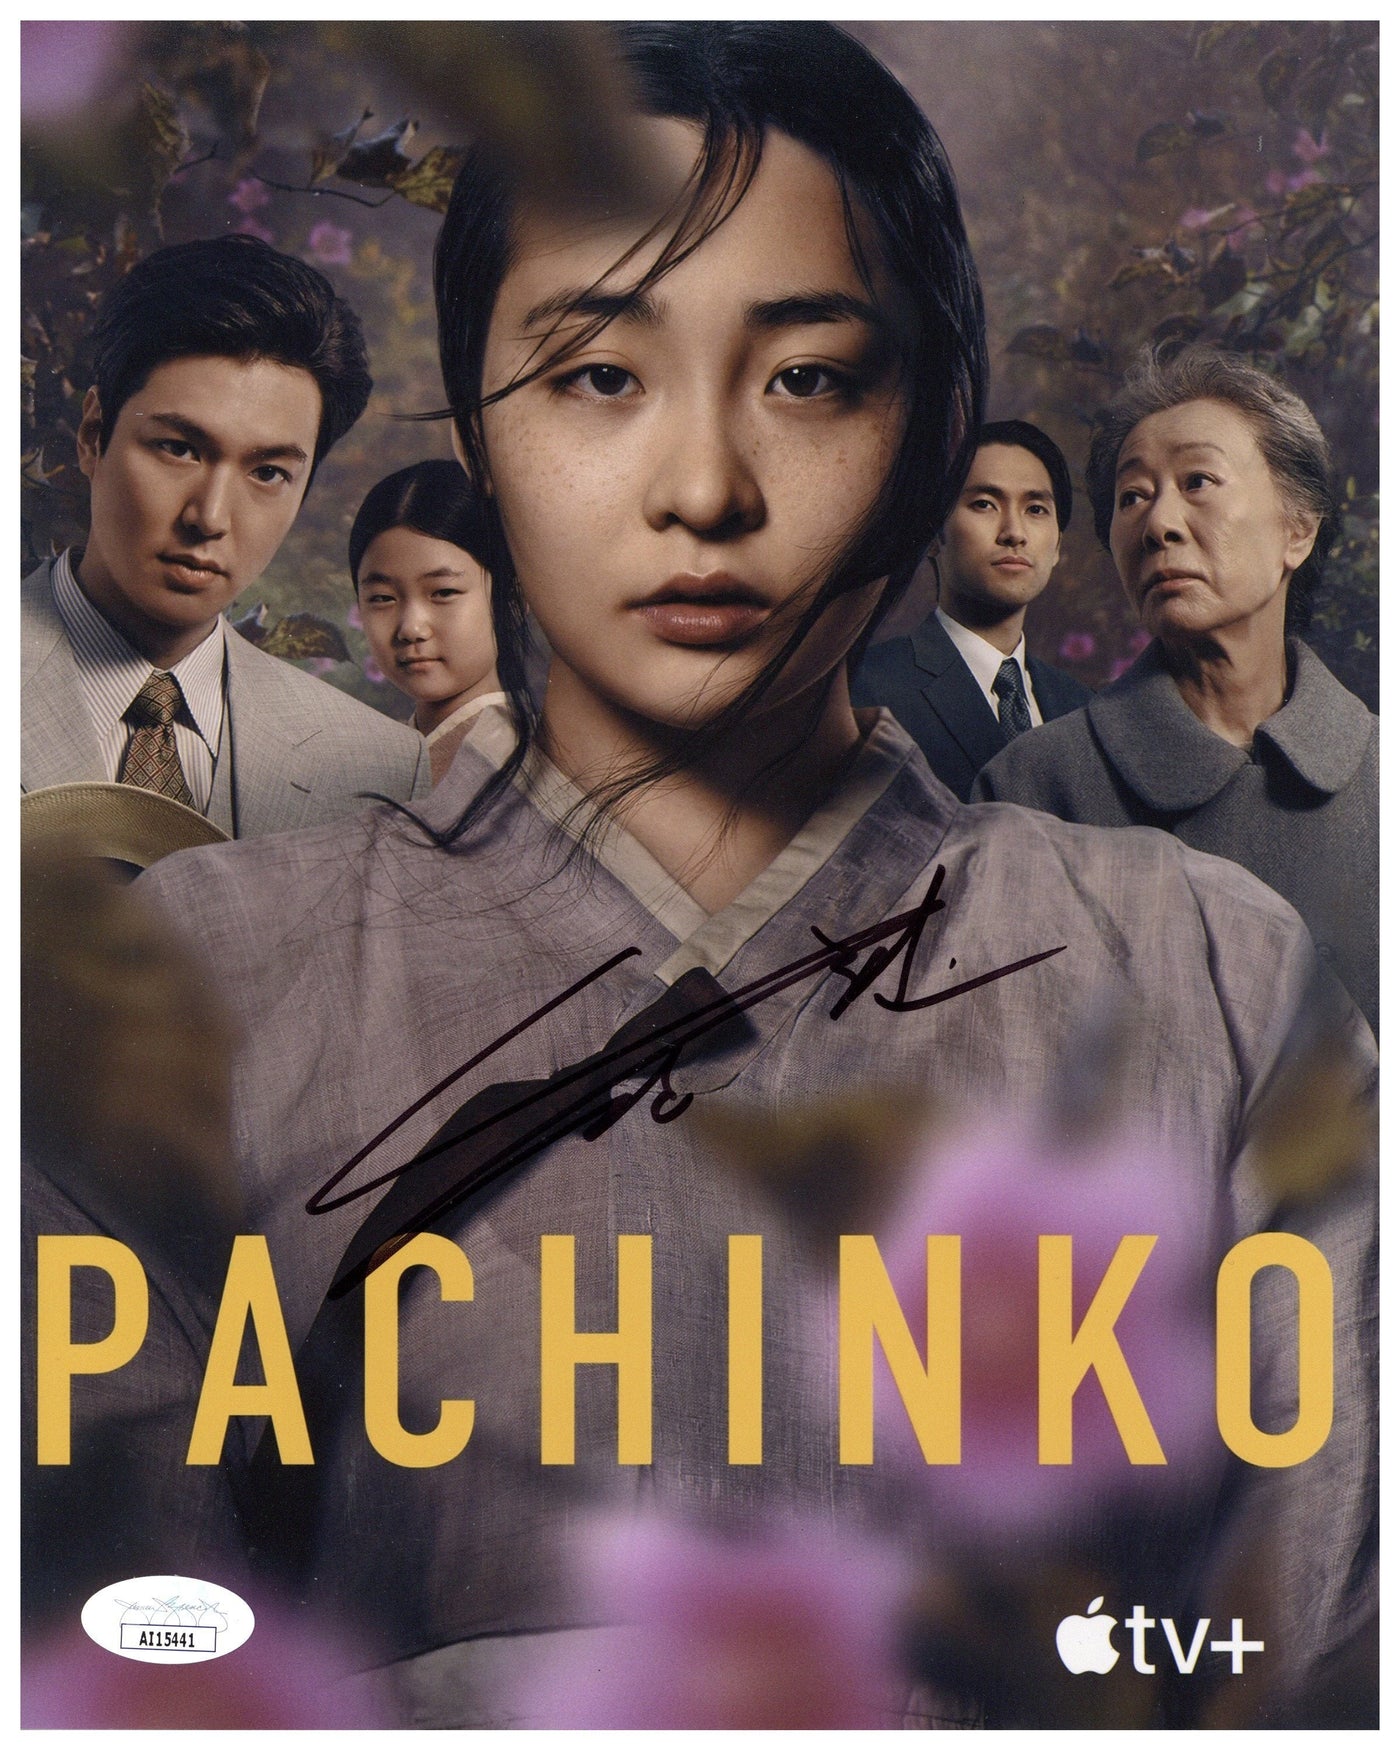 Steve Sanghyun Noh Signed 8x10 Photograph Pachinko Apple TV+ Autographed JSA